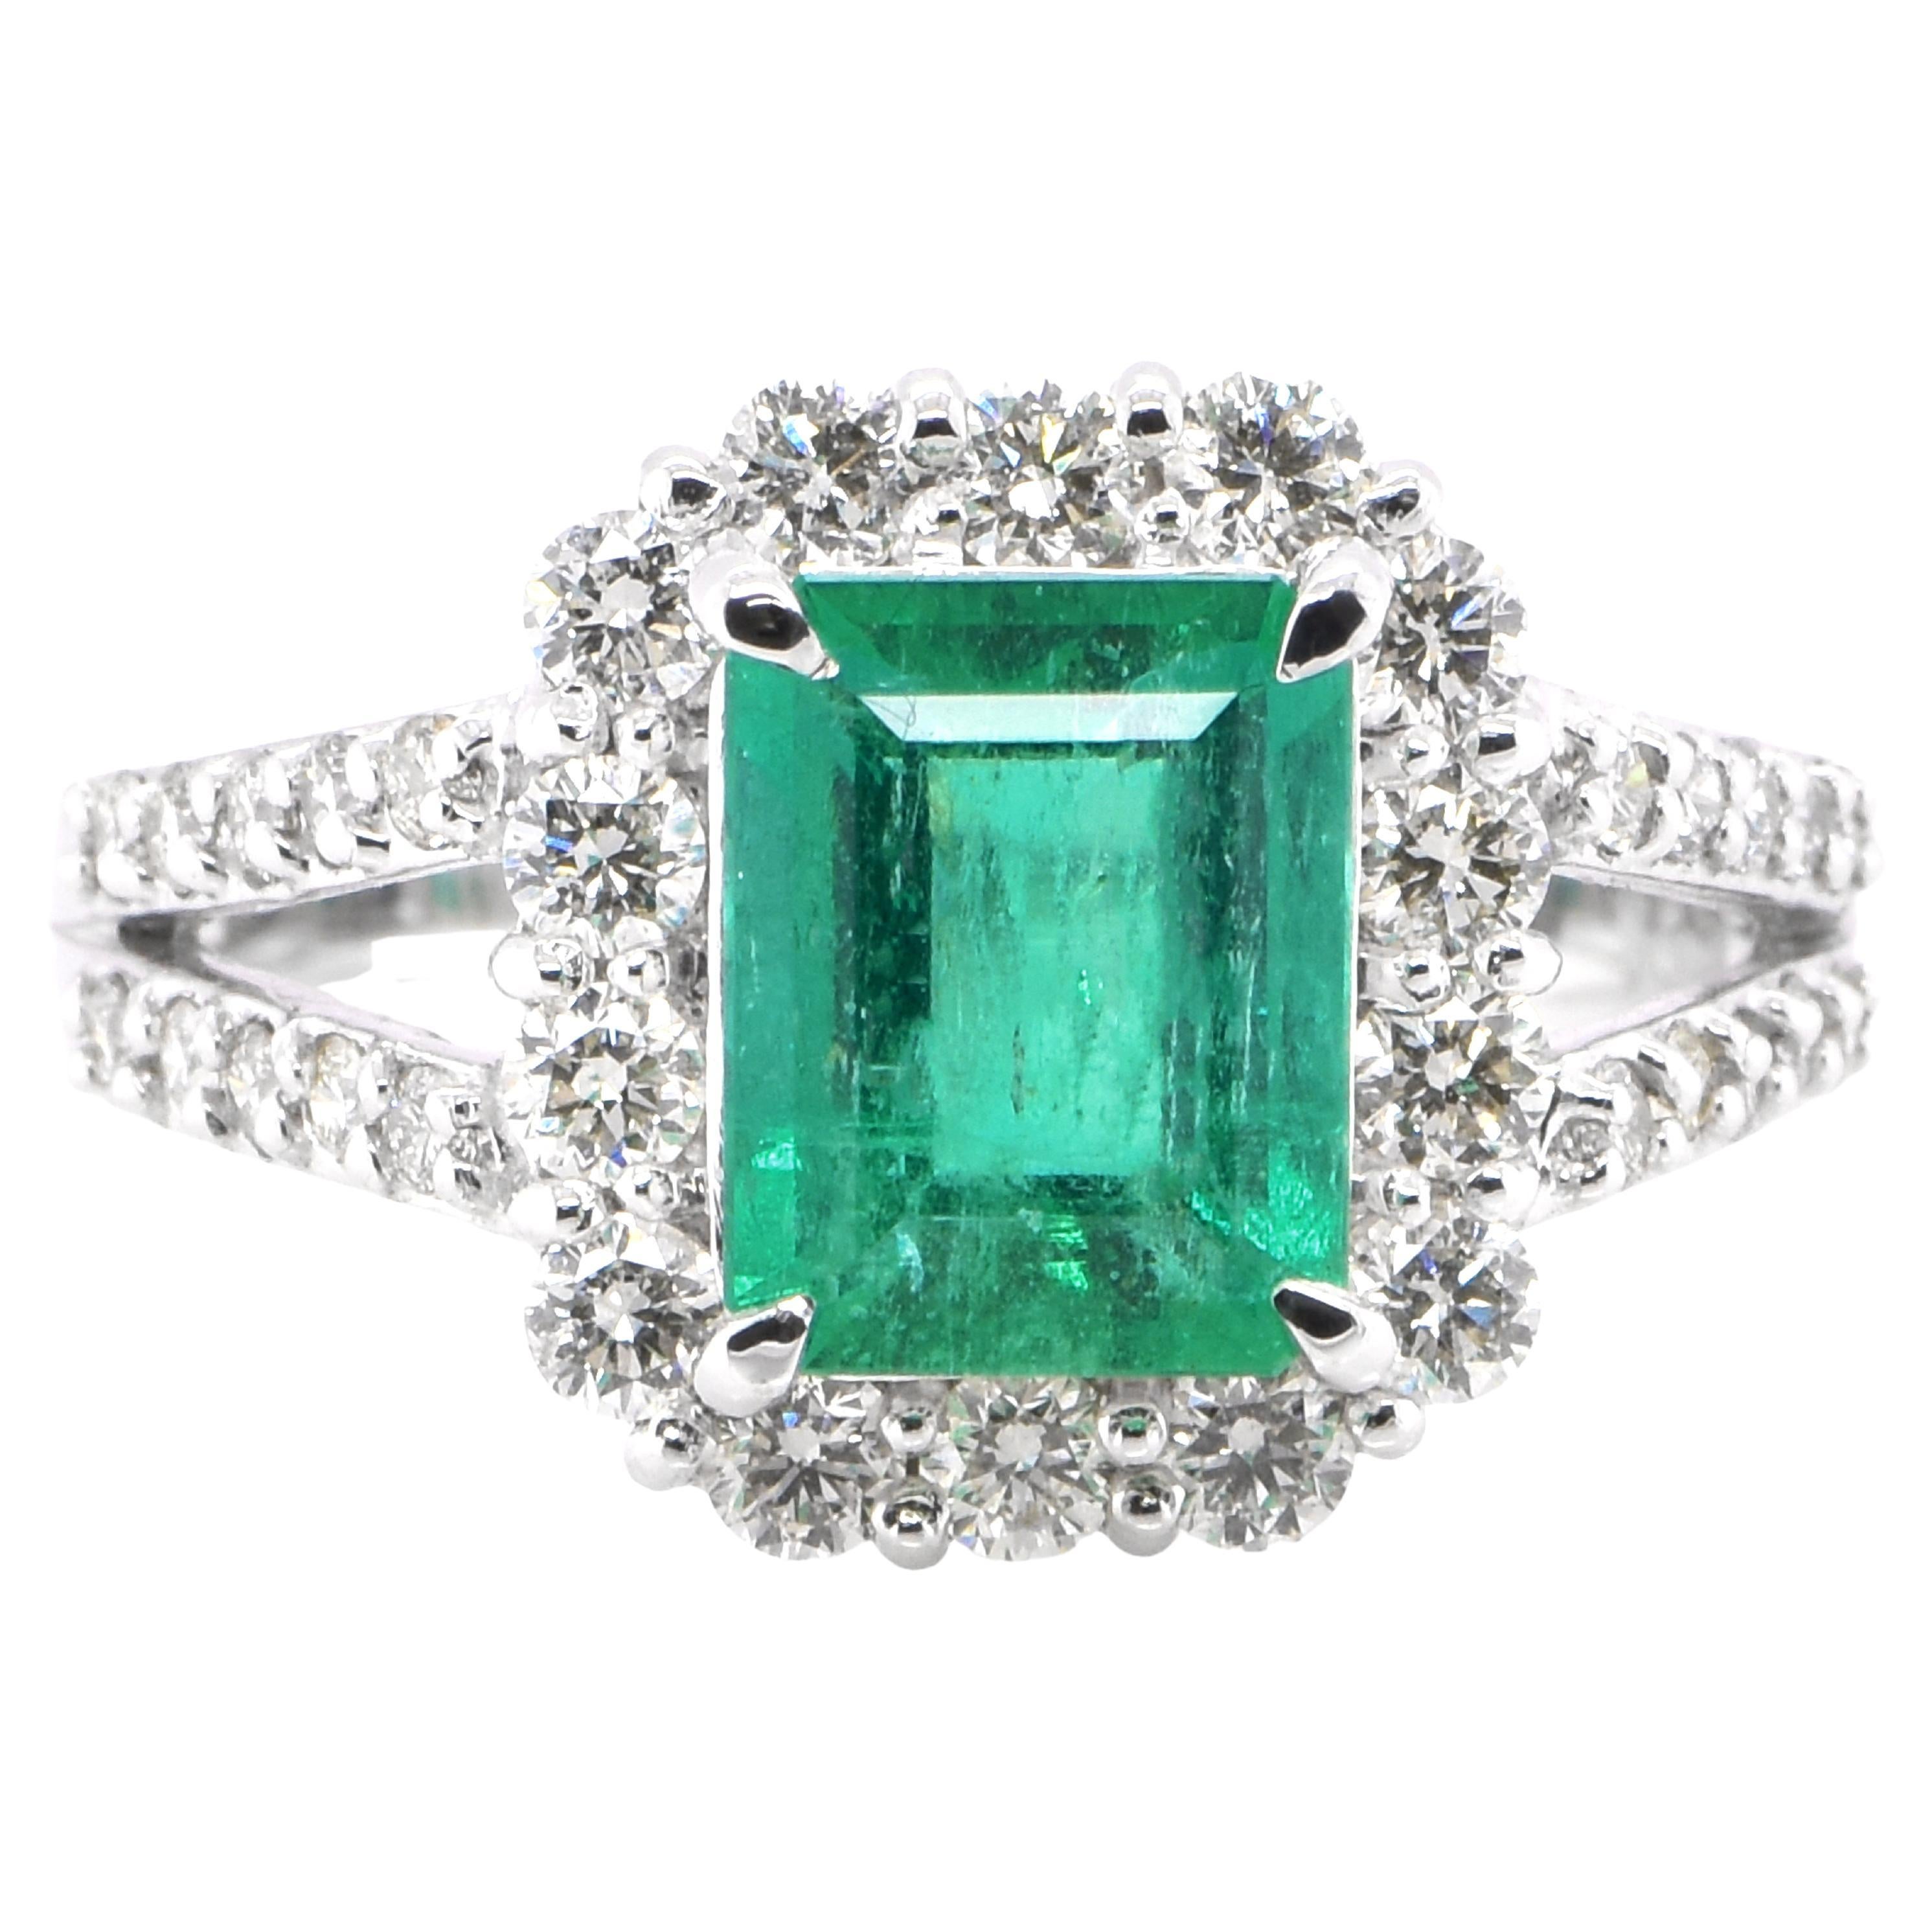 1.64 Carat Natural Emerald and Diamond Halo Ring Set in Platinum